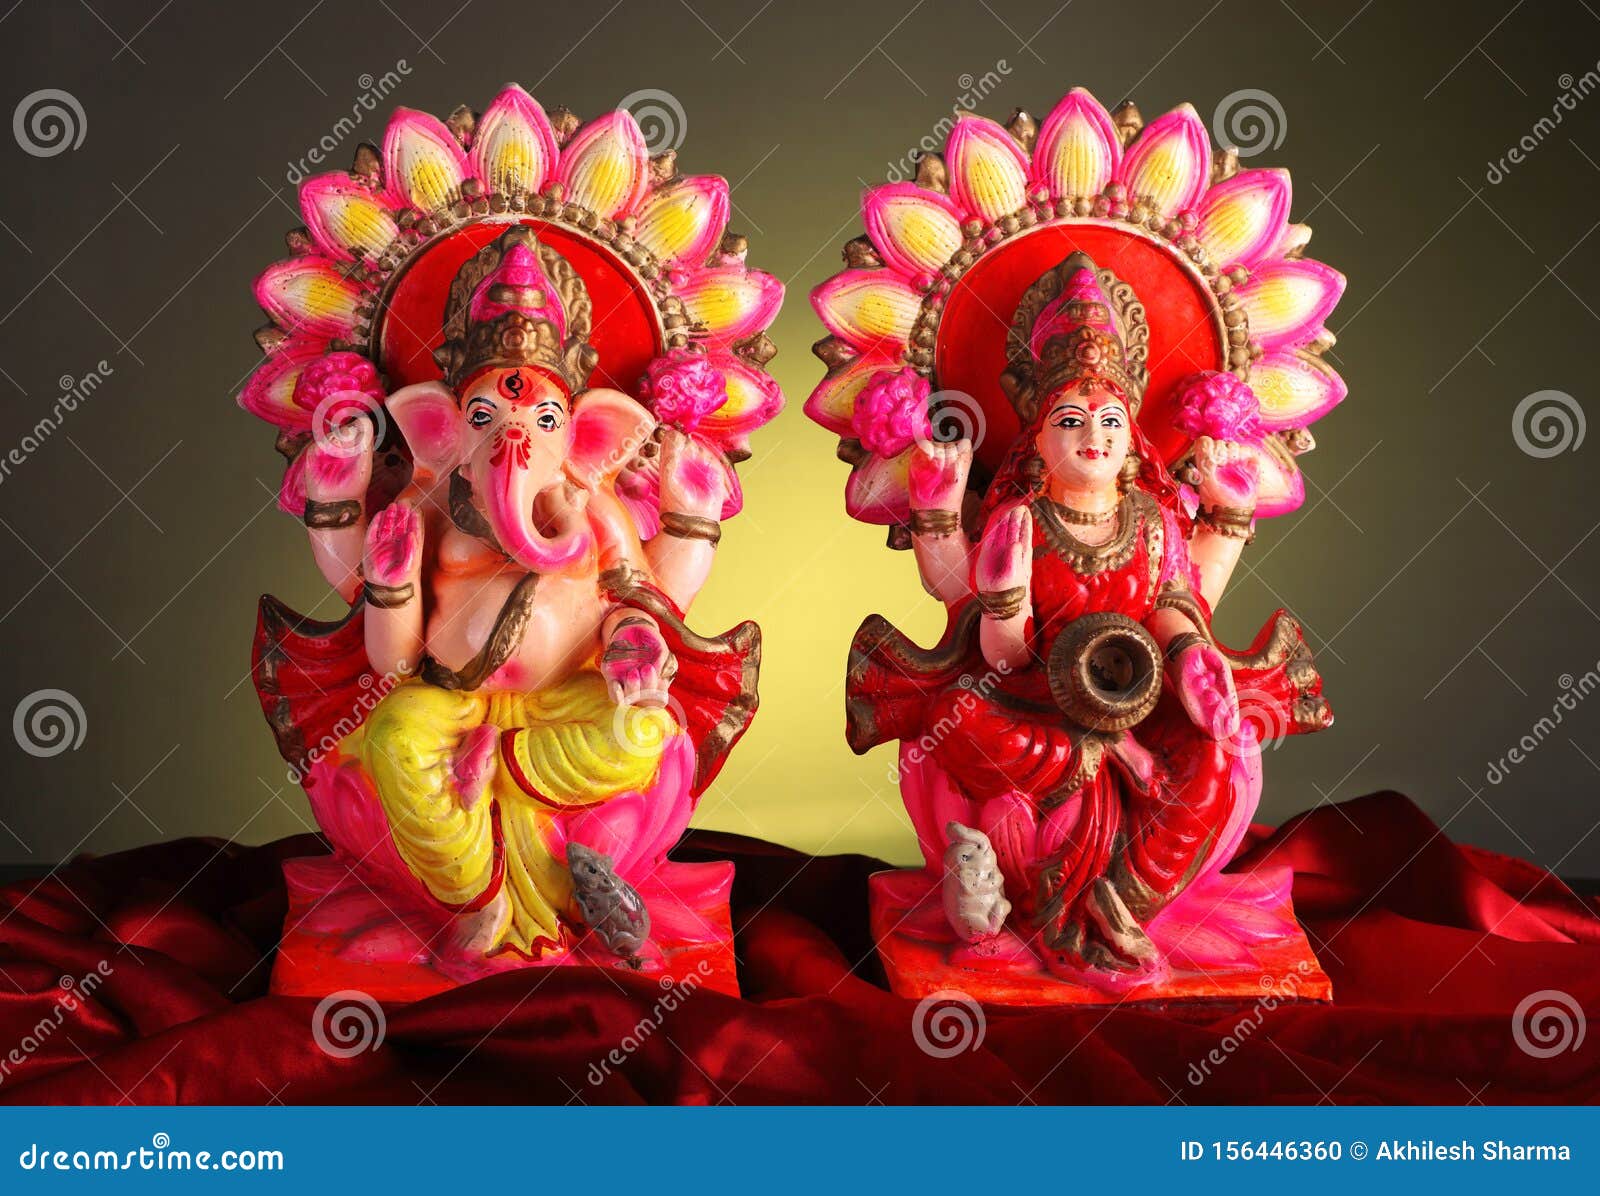 Beautifully Decorated Lord Ganesha and Goddess Laxmi Idols ...